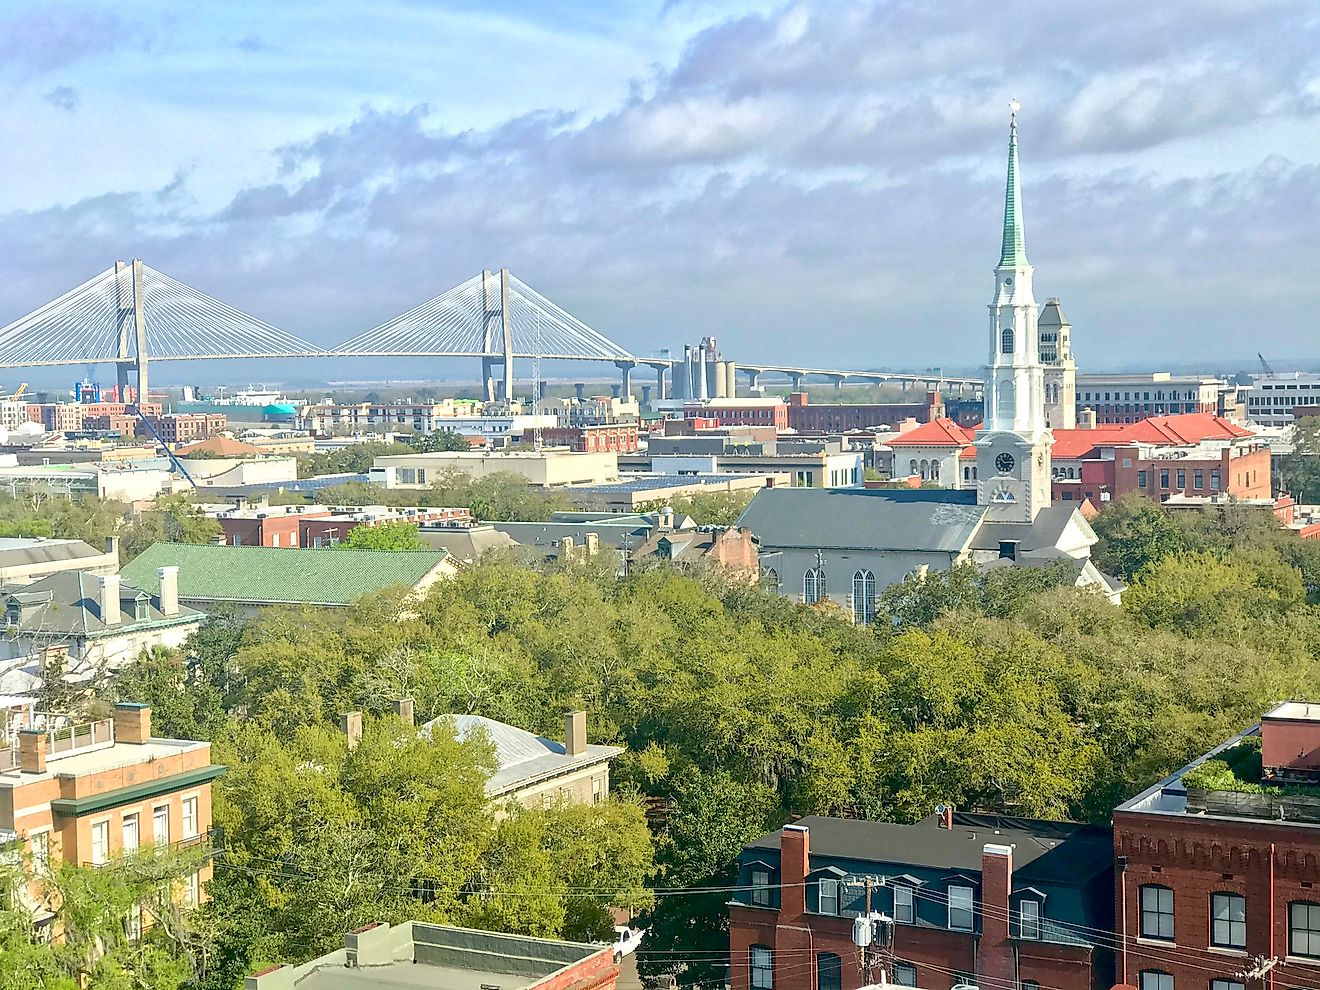 The cityscape of Savannah, Georgia